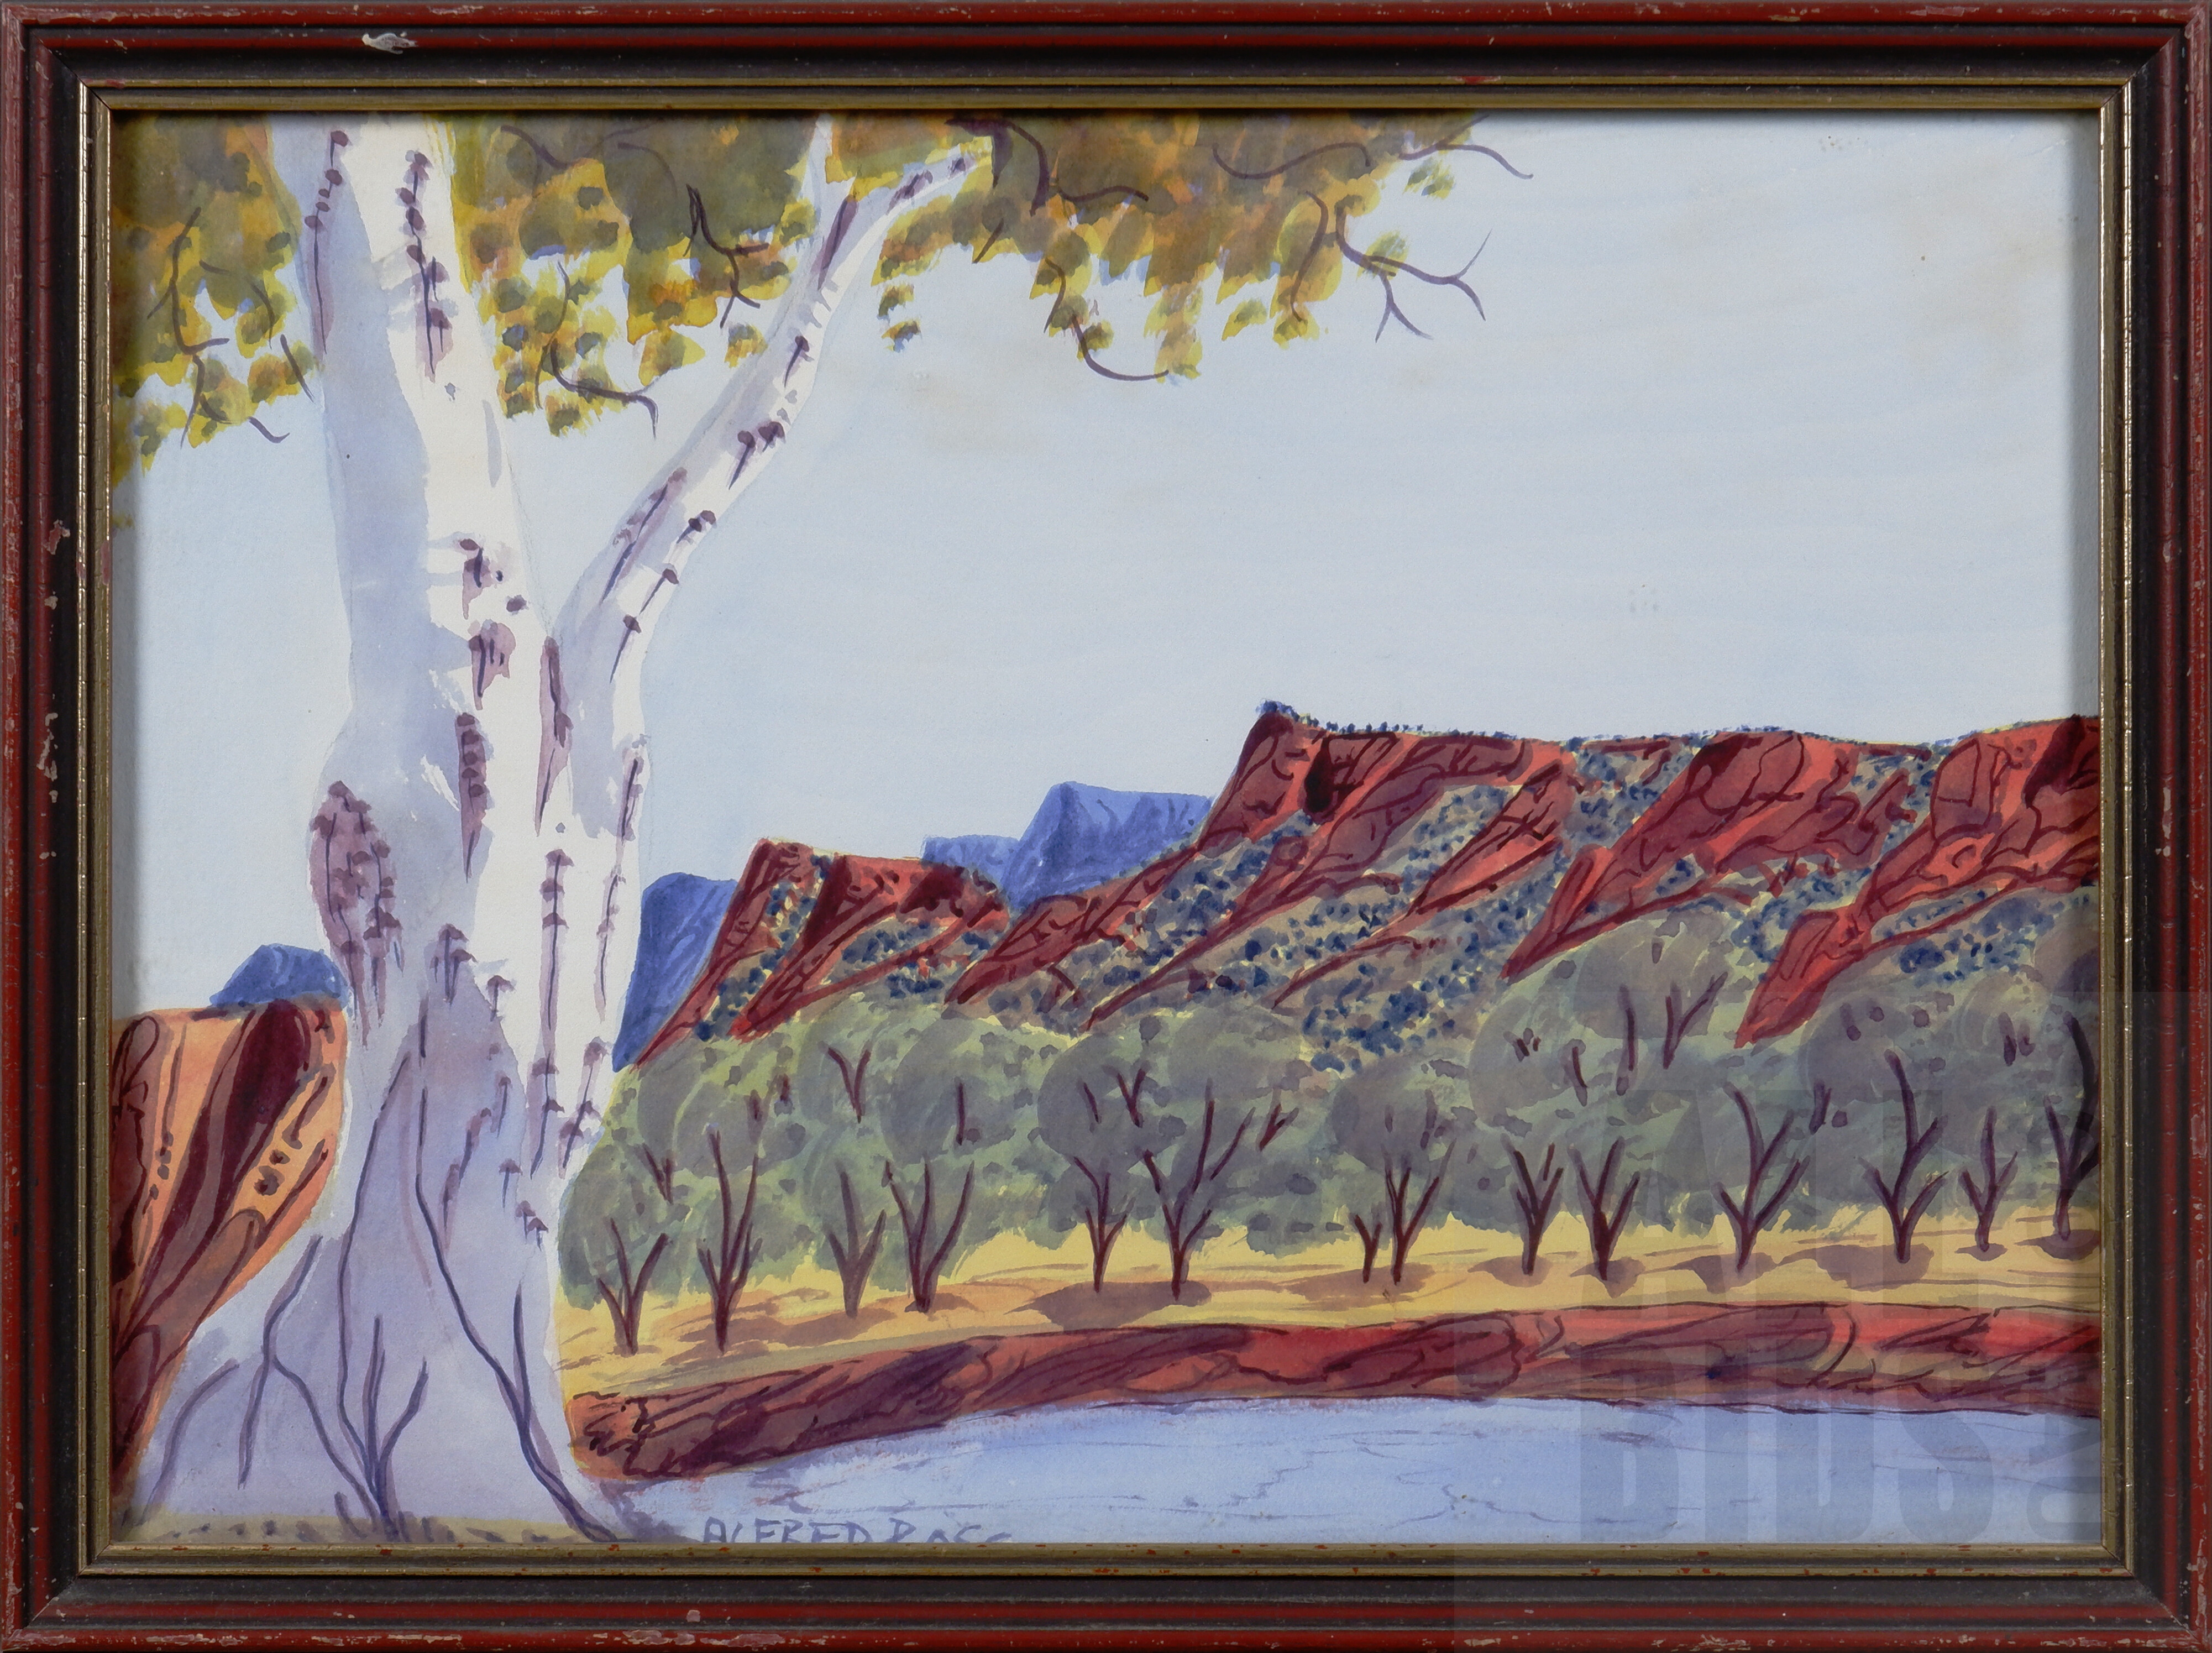 'Alfred Ross (born 1945), Central Australian Landscape, Watercolour, 25 x 34 cm'